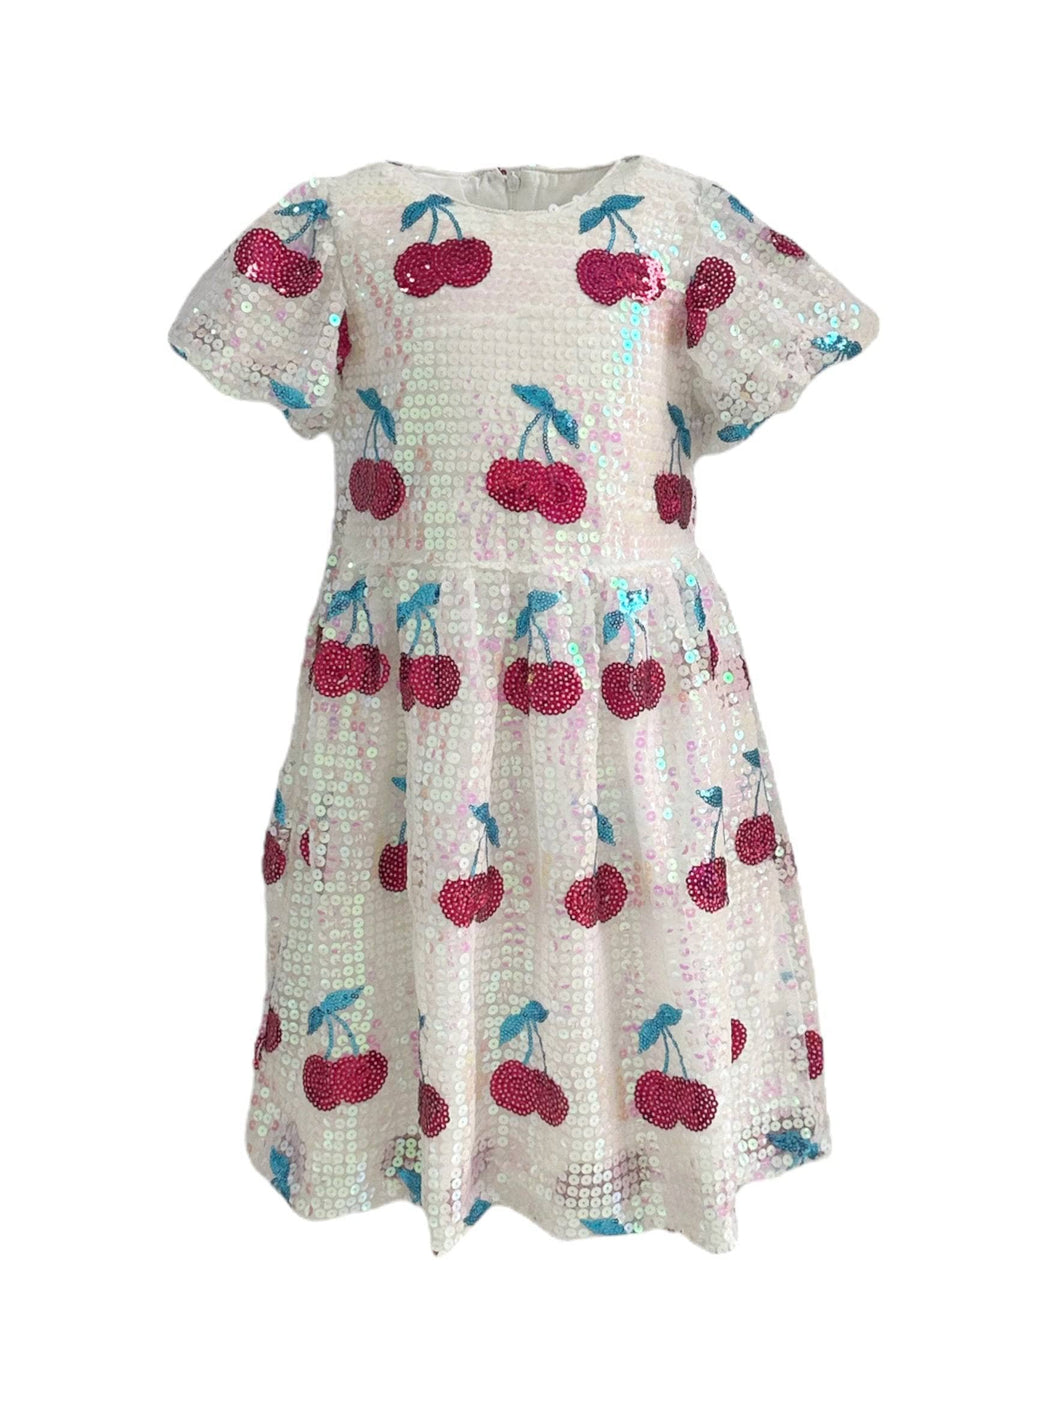 Cherry Sequin Dress